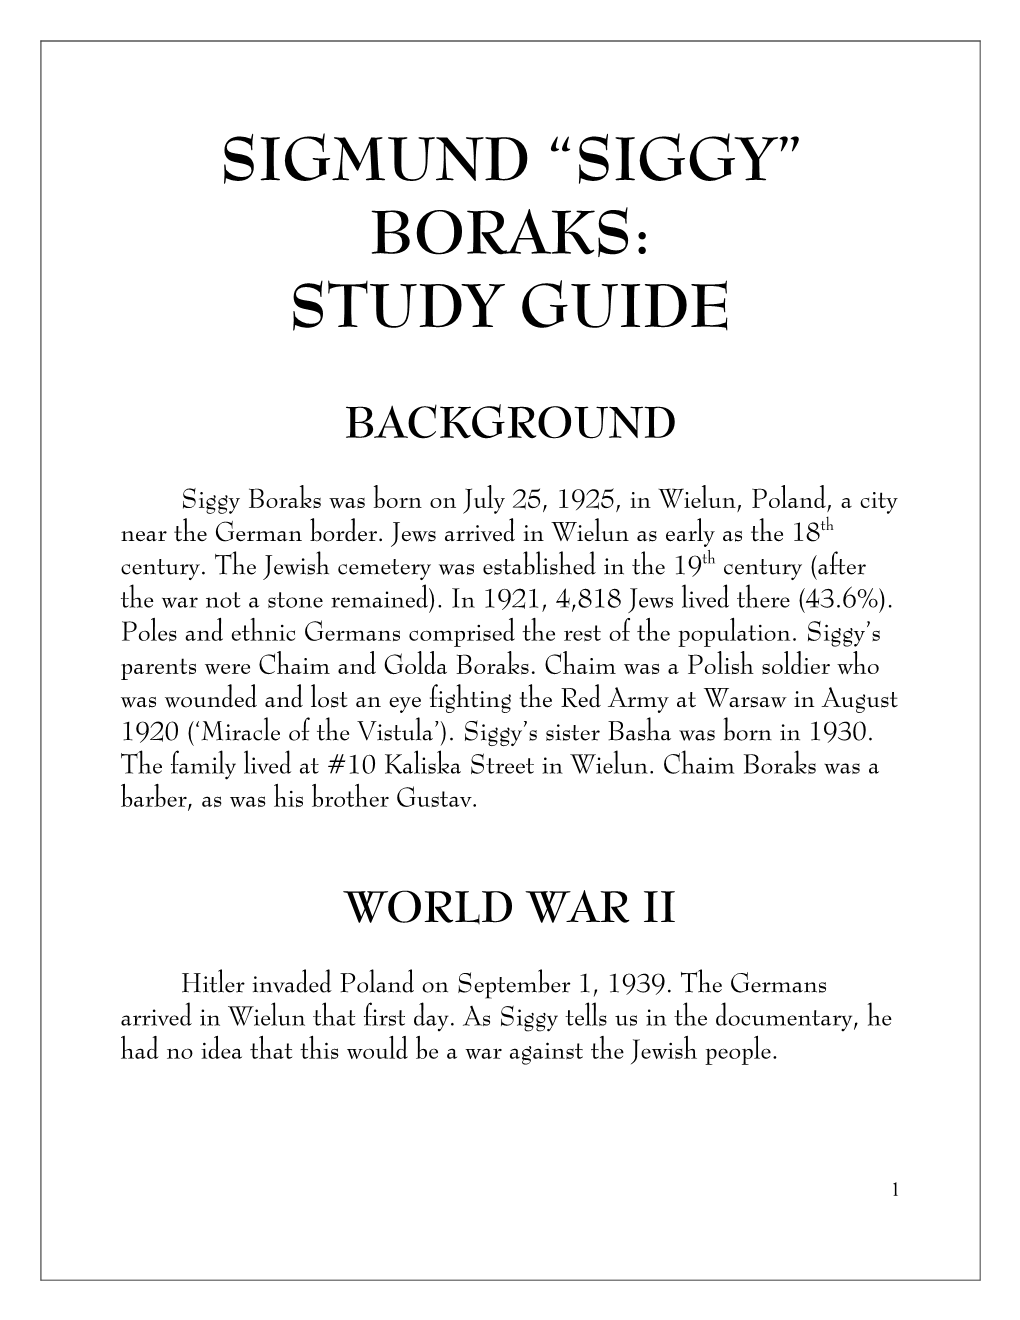 Sigmund “Siggy” Boraks: Study Guide